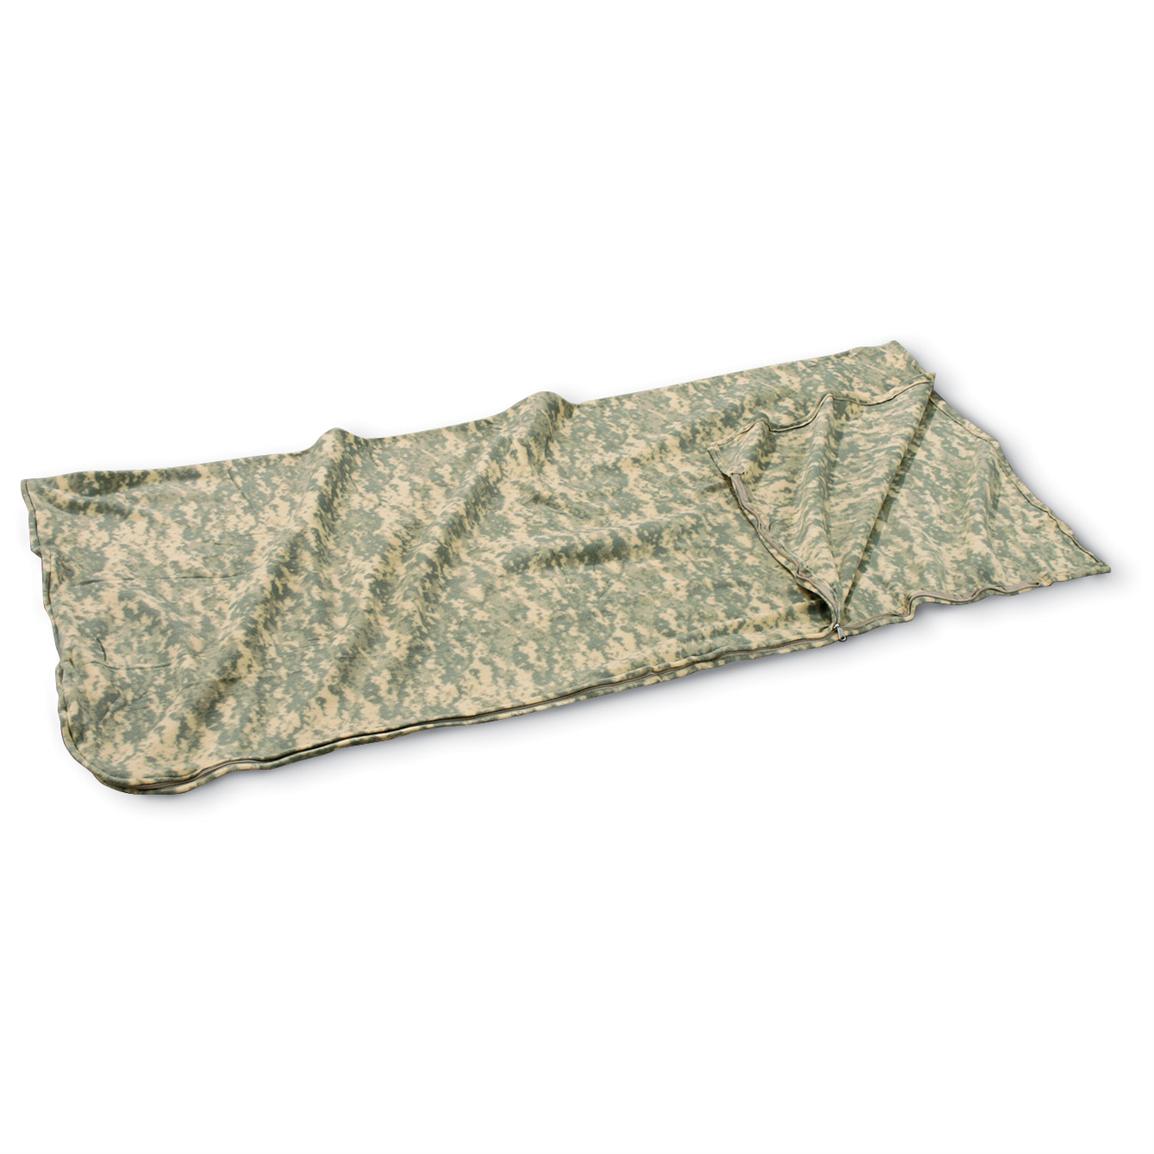 New U.S. Mil. Army Sleeping Bag, Digital Camo - 25048, Sleeping Bags at ...